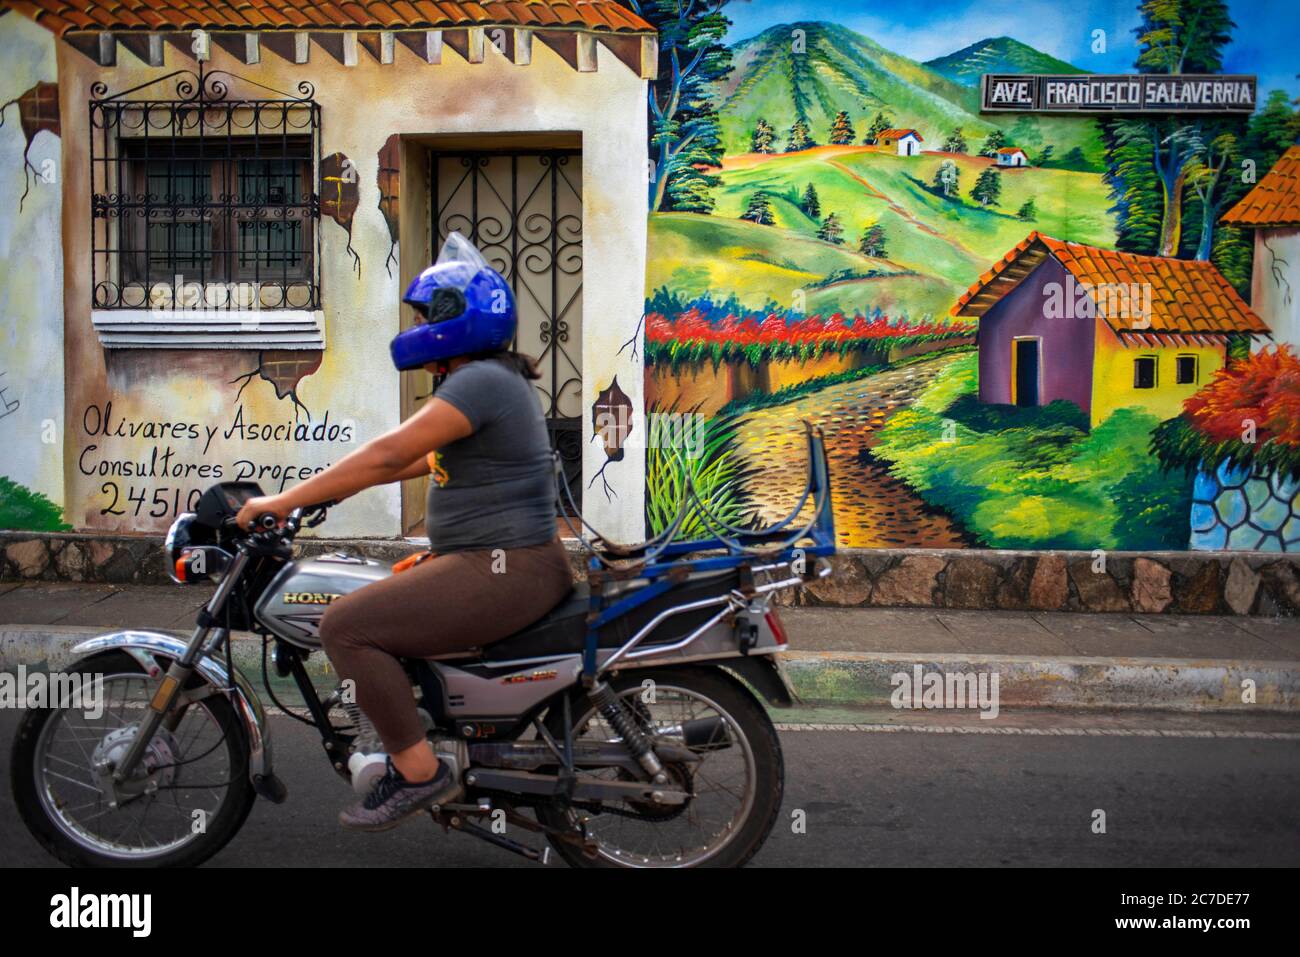 Motorbike and Wall street art graffiti in Salcoatitan Sonsonate El Salvador Central America. Ruta De Las Flores, Department Of Sonsonate. Stock Photo